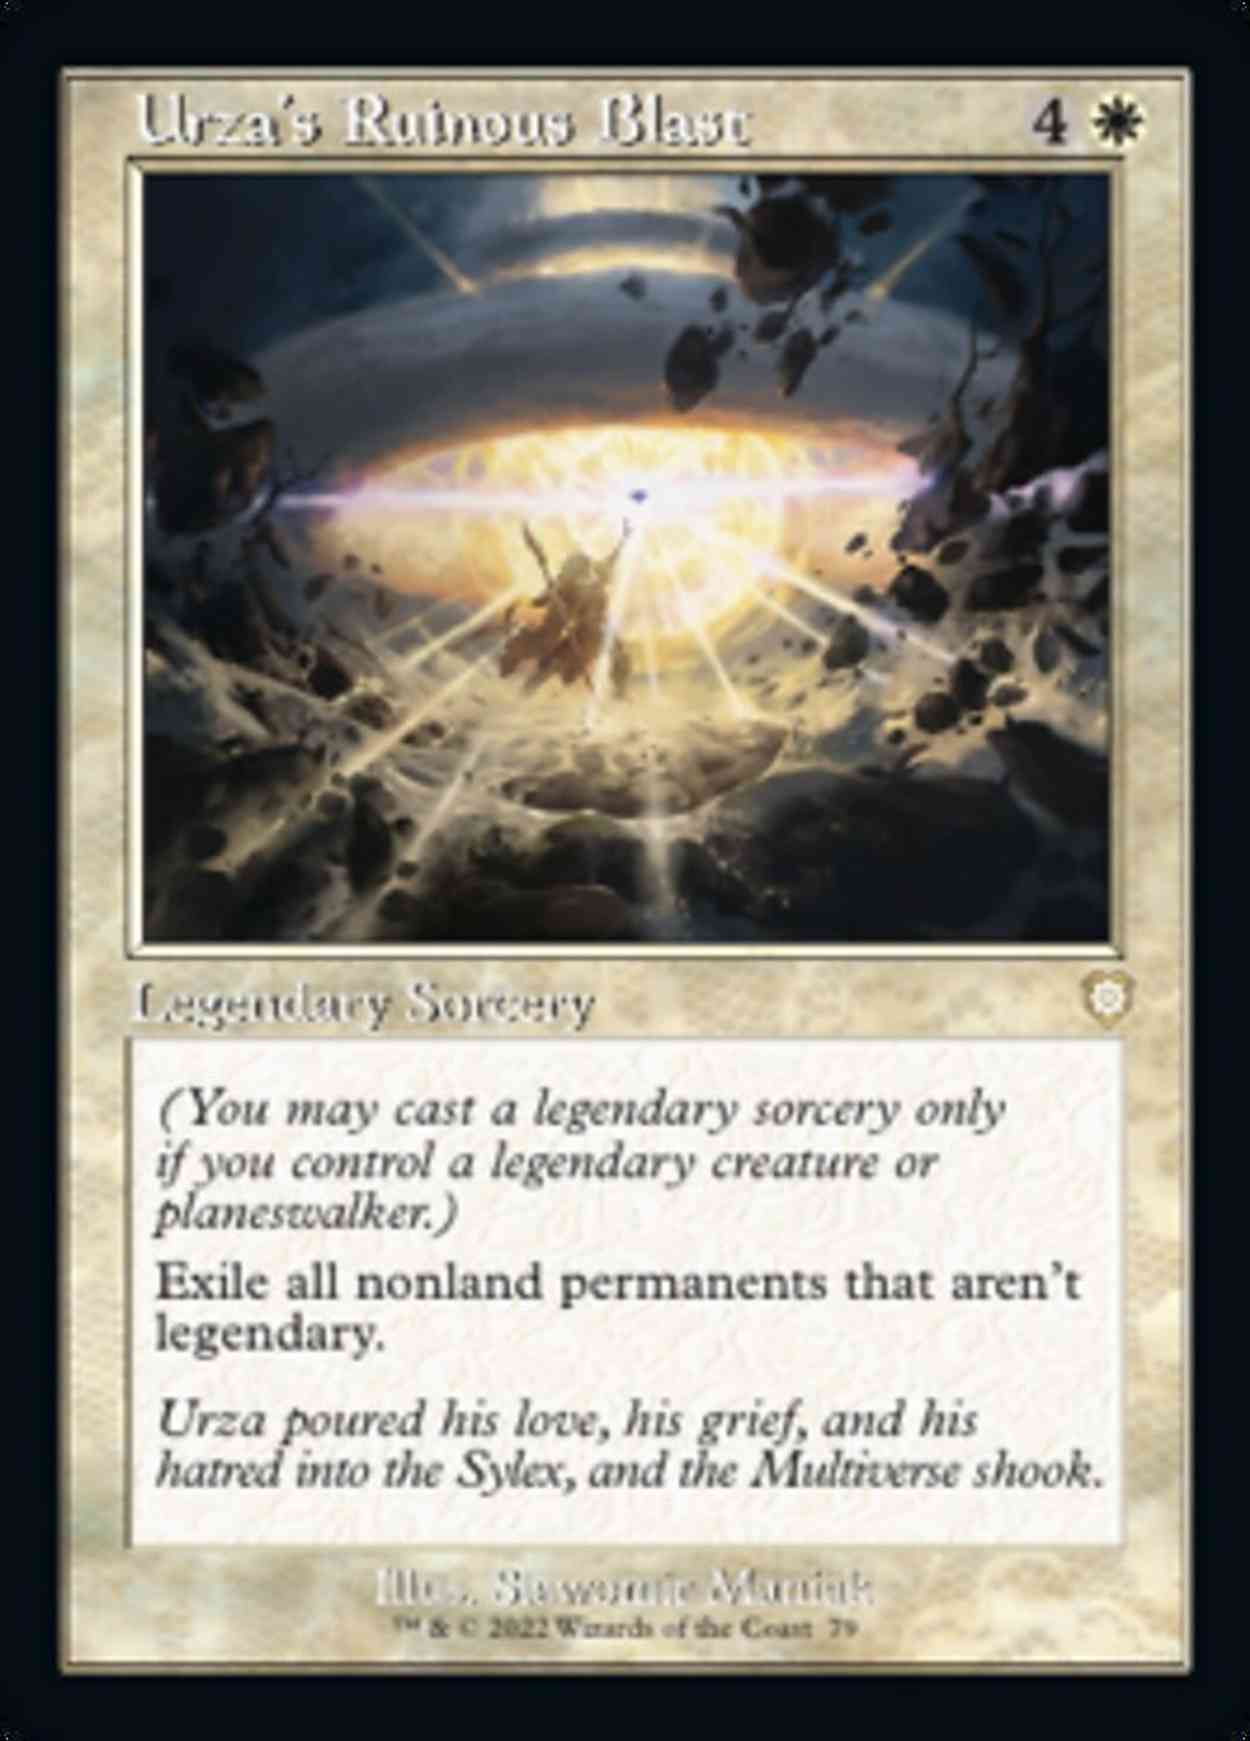 Urza's Ruinous Blast magic card front